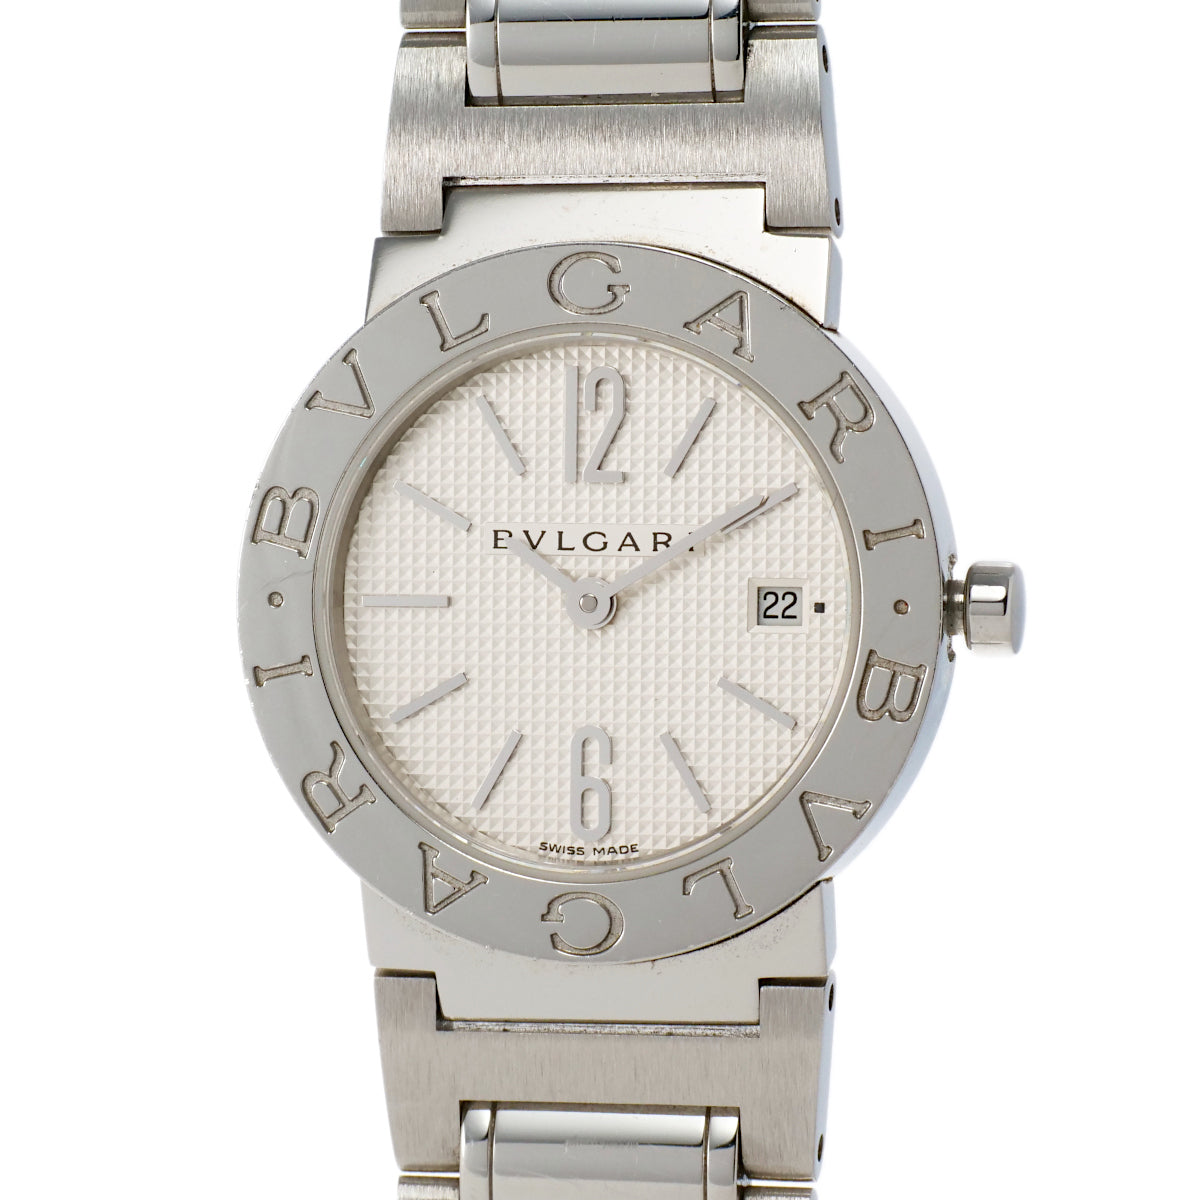 Bvlgari BVLGARI Women's Quartz Watch with White Dial, Stainless Steel Silver, BB26SS BB26SS